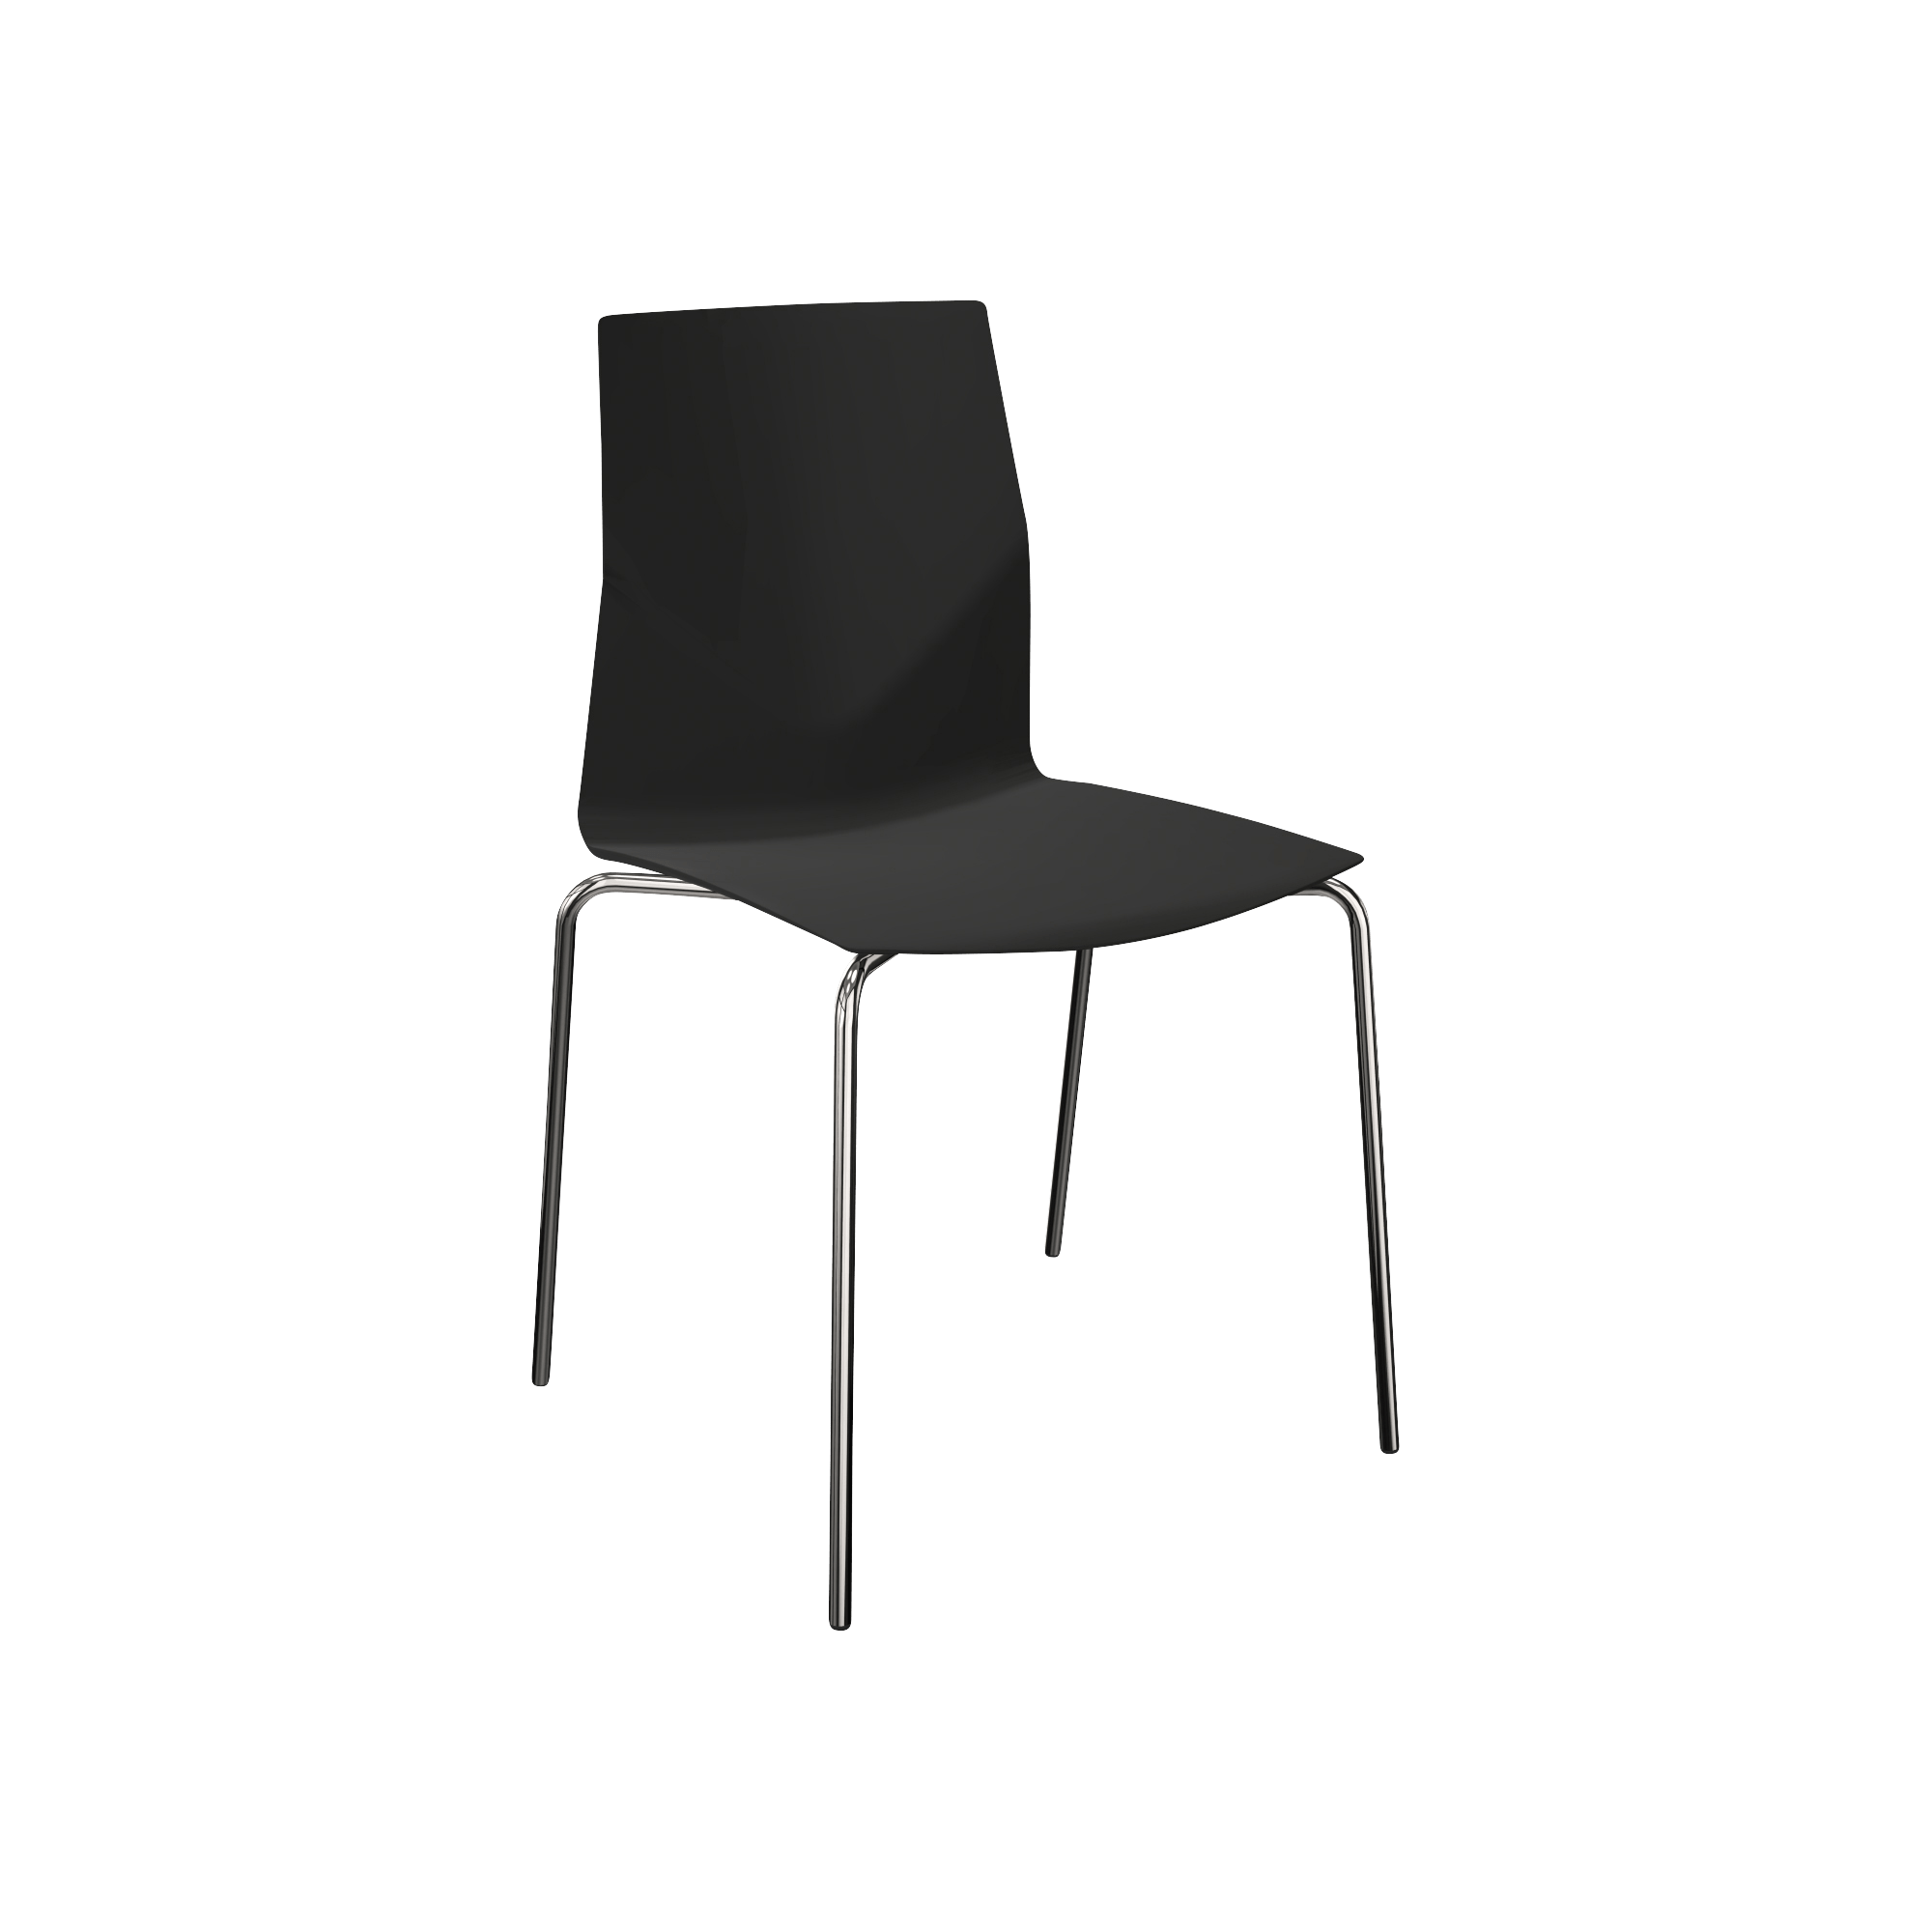 A black chair with 4 chrome legs